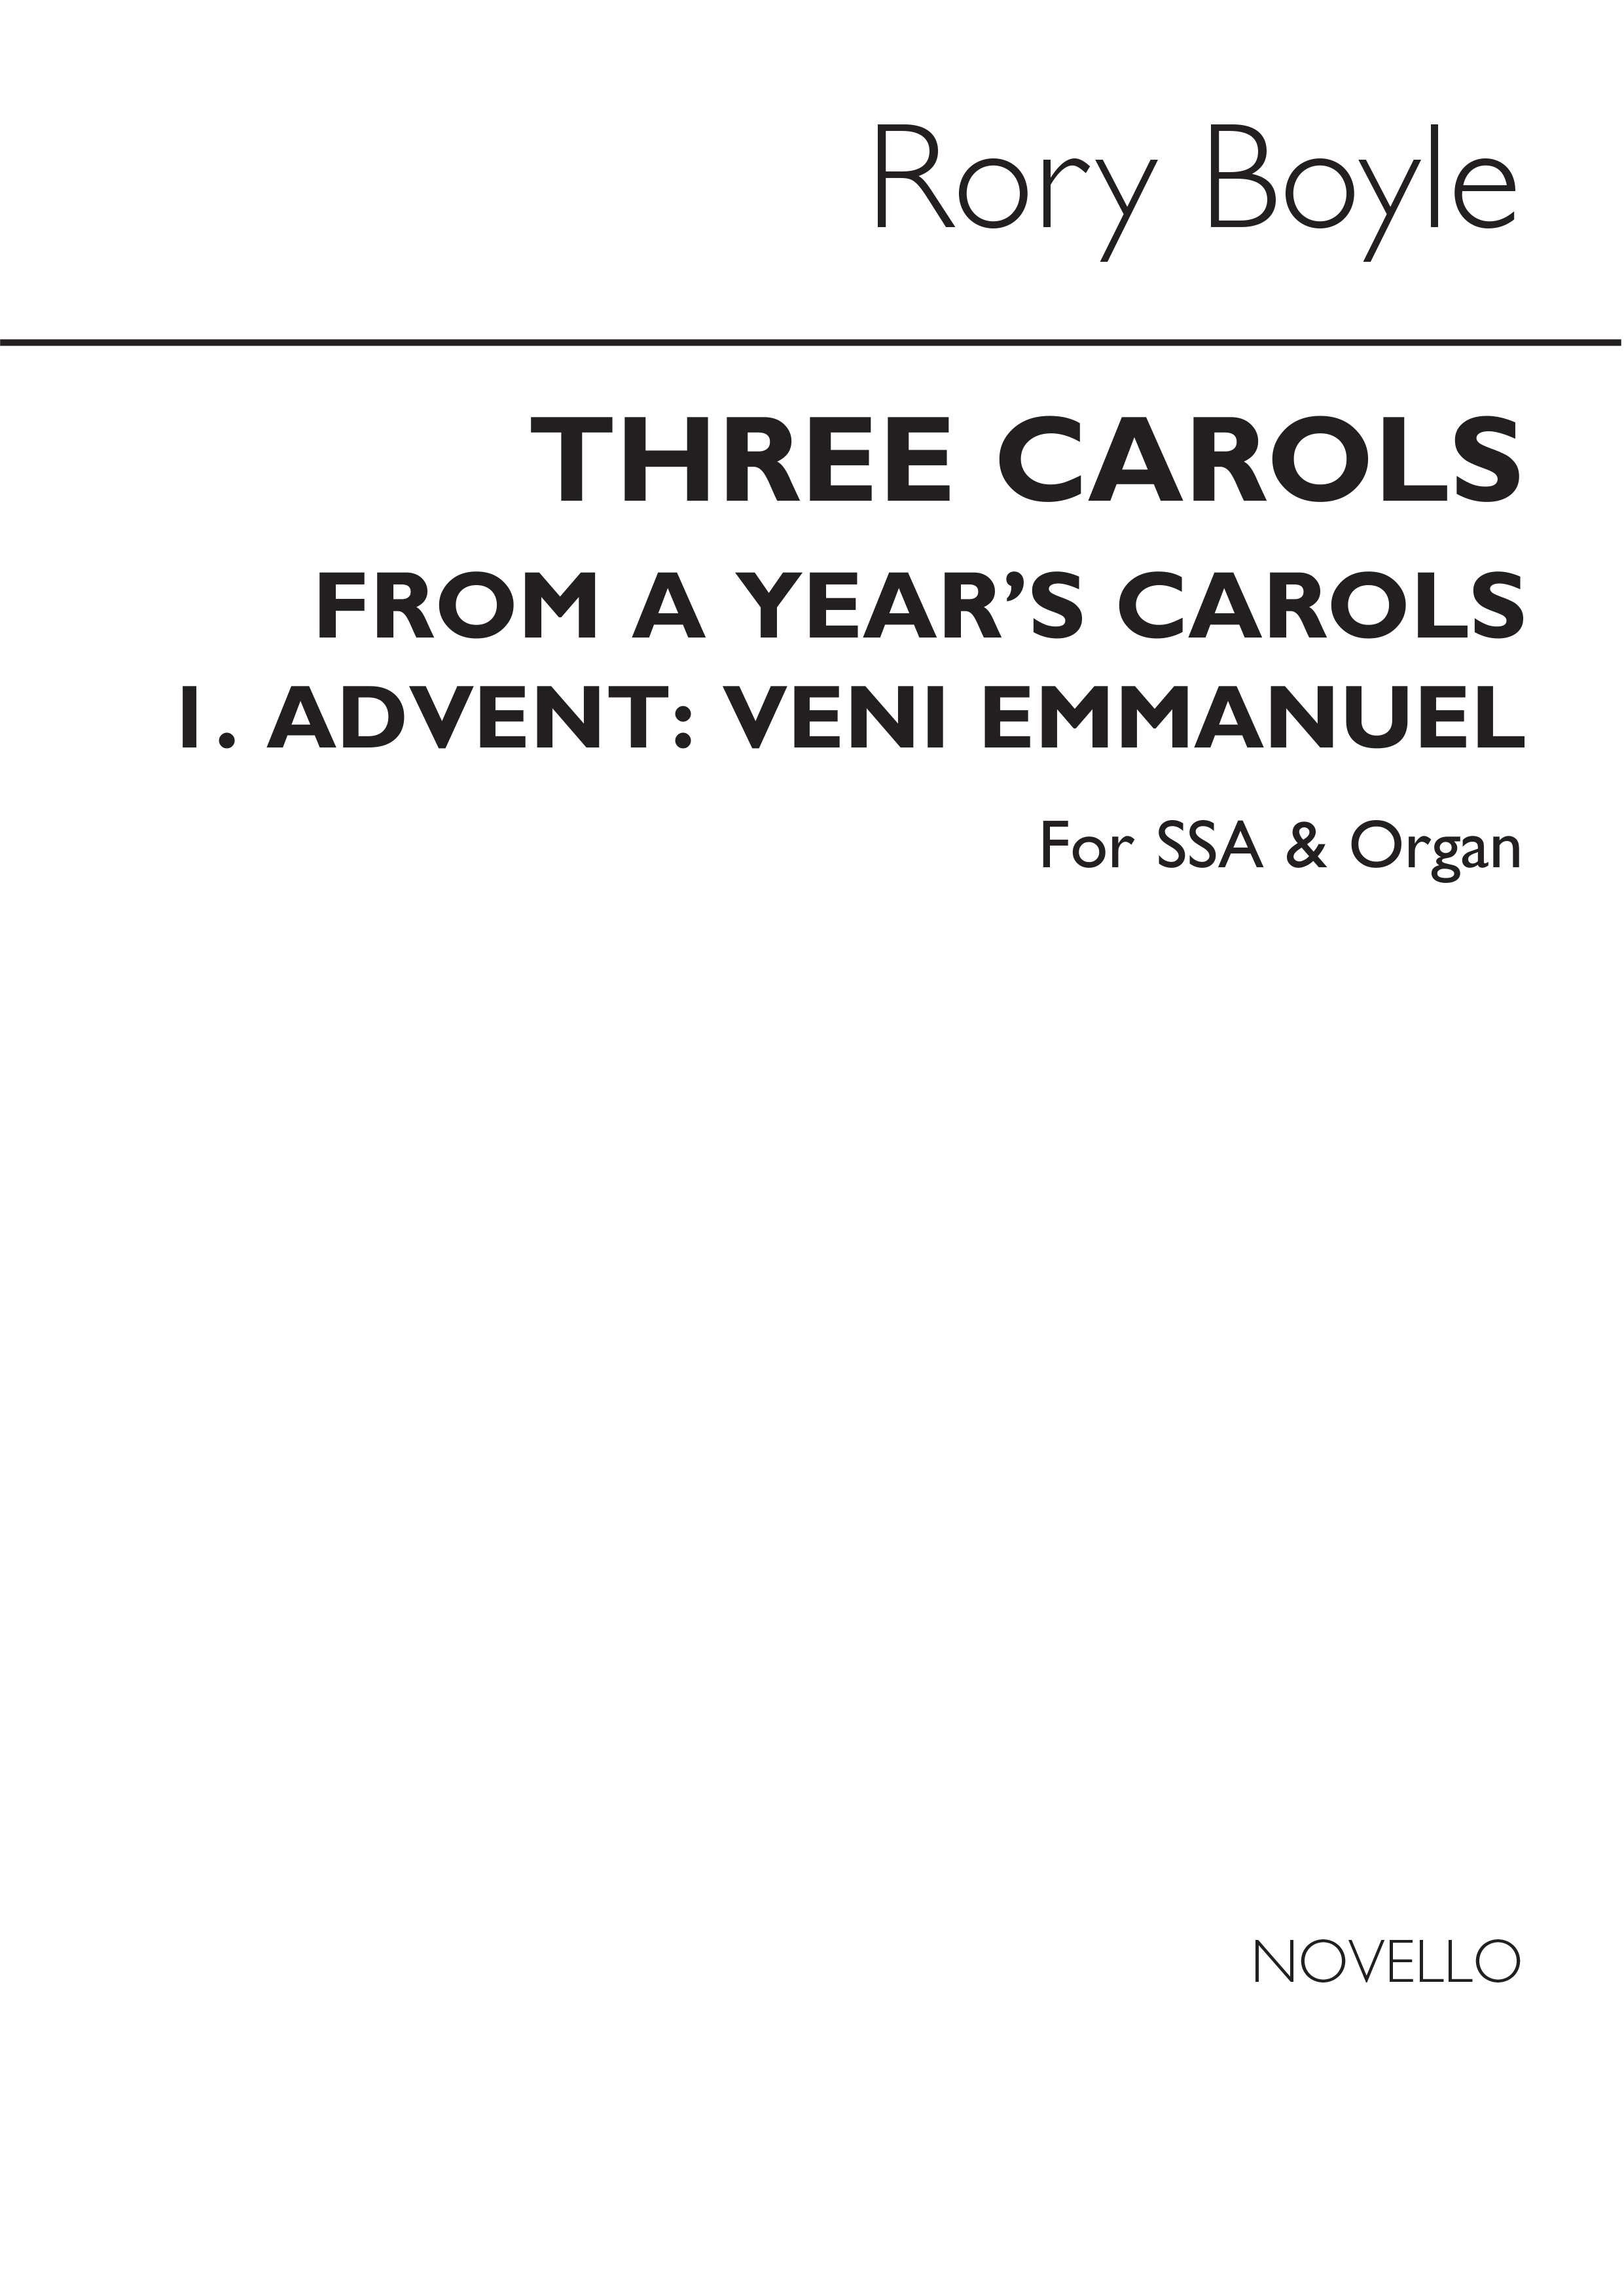 Rory Boyle: A Year's Carols No.1 - Veni Emmanuel (Advent): SATB: Vocal Score